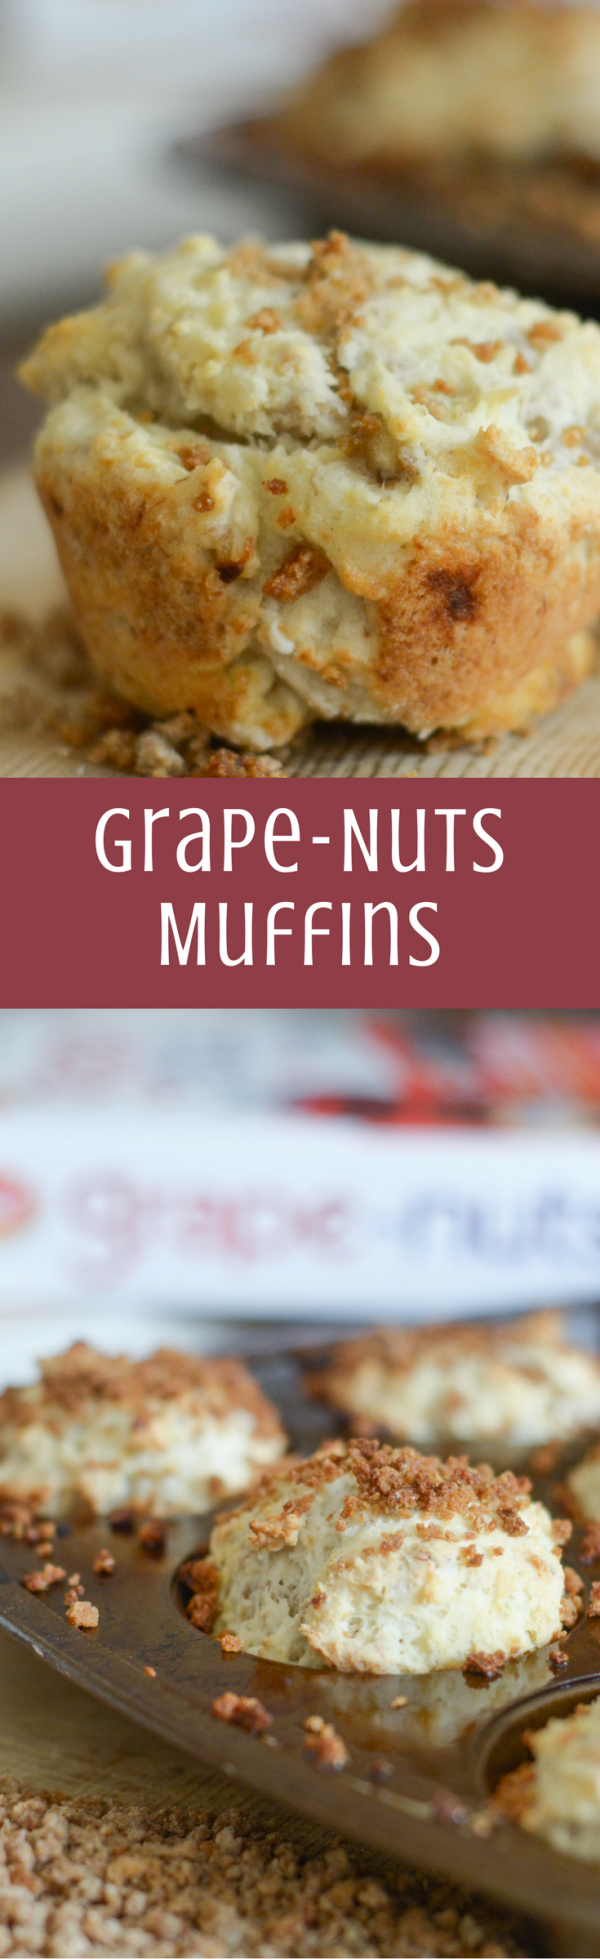 Grape-Nuts Muffins